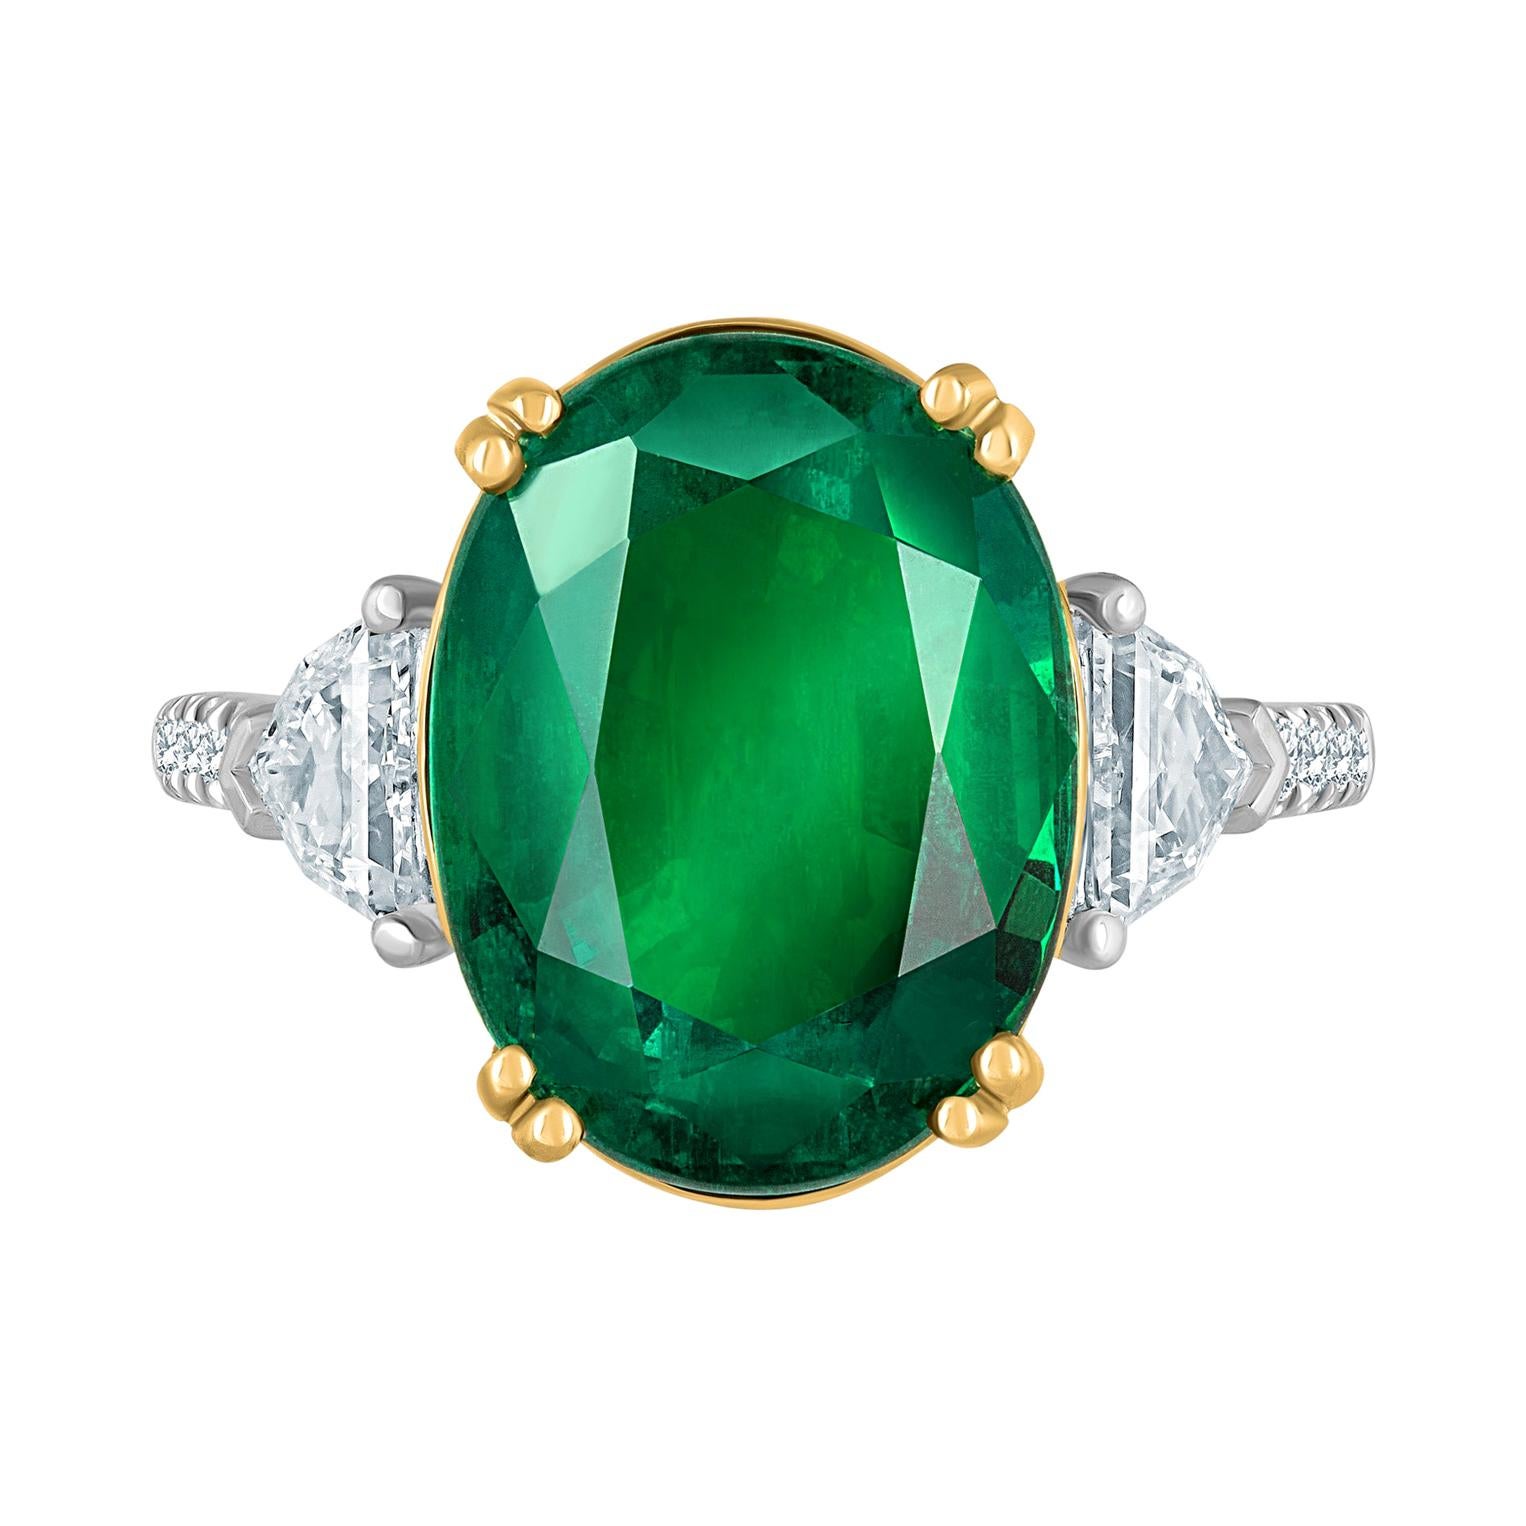 Emilio Jewelry Certified 9.77 Carat Oval Emerald Diamond Ring